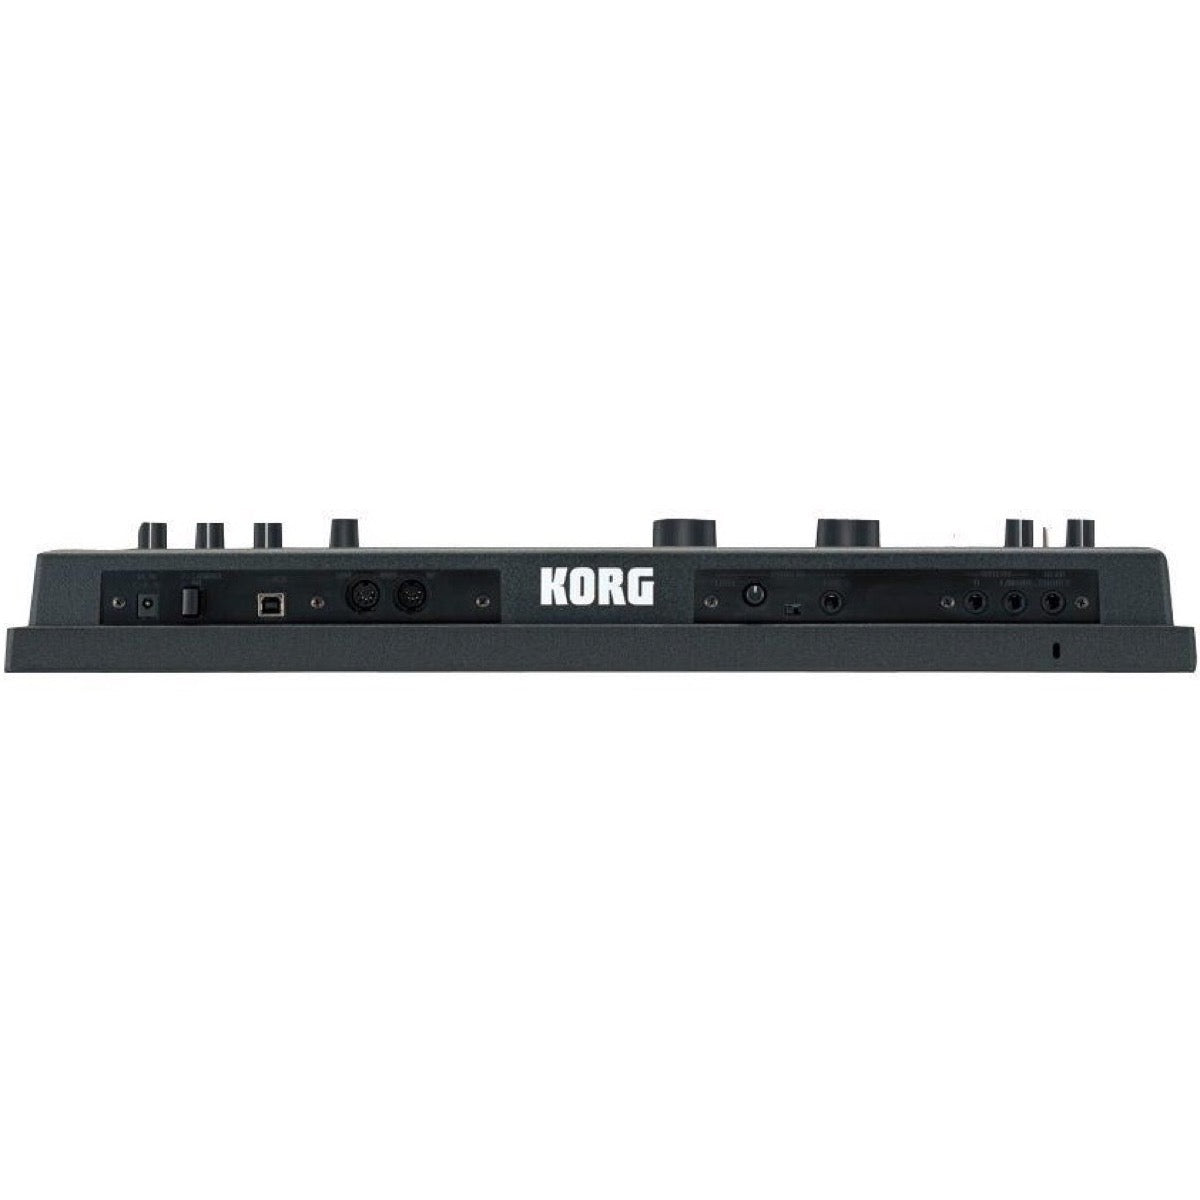 Korg MicroKorg XL PLUS Analog Modeling Synthesizer and Vocoder Keyboard